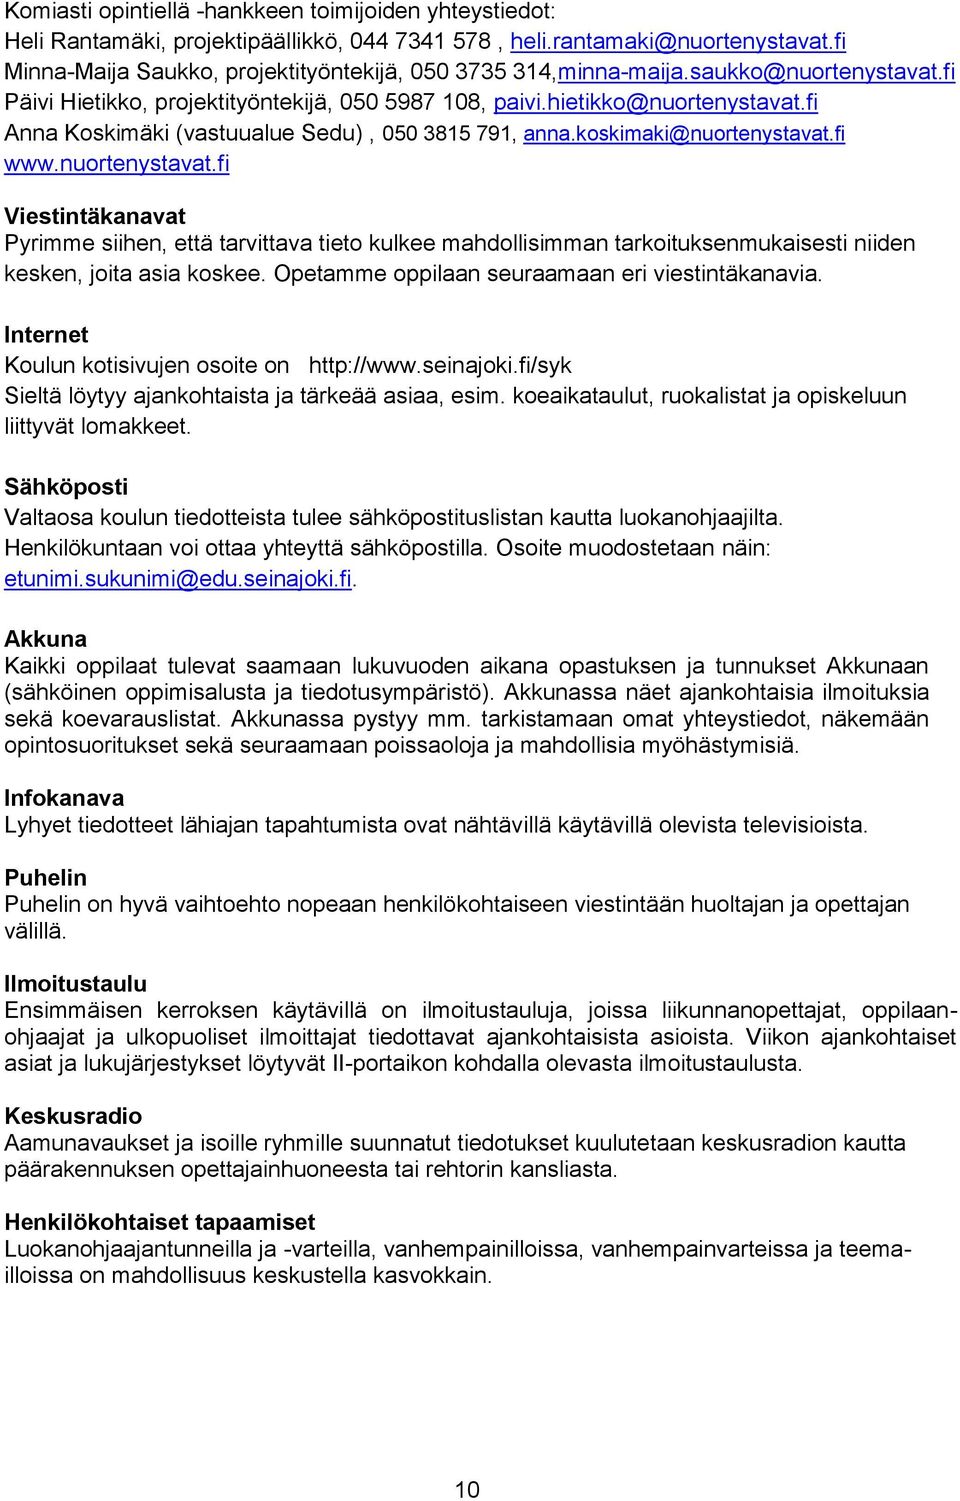 fi Anna Koskimäki (vastuualue Sedu), 050 3815 791, anna.koskimaki@nuortenystavat.